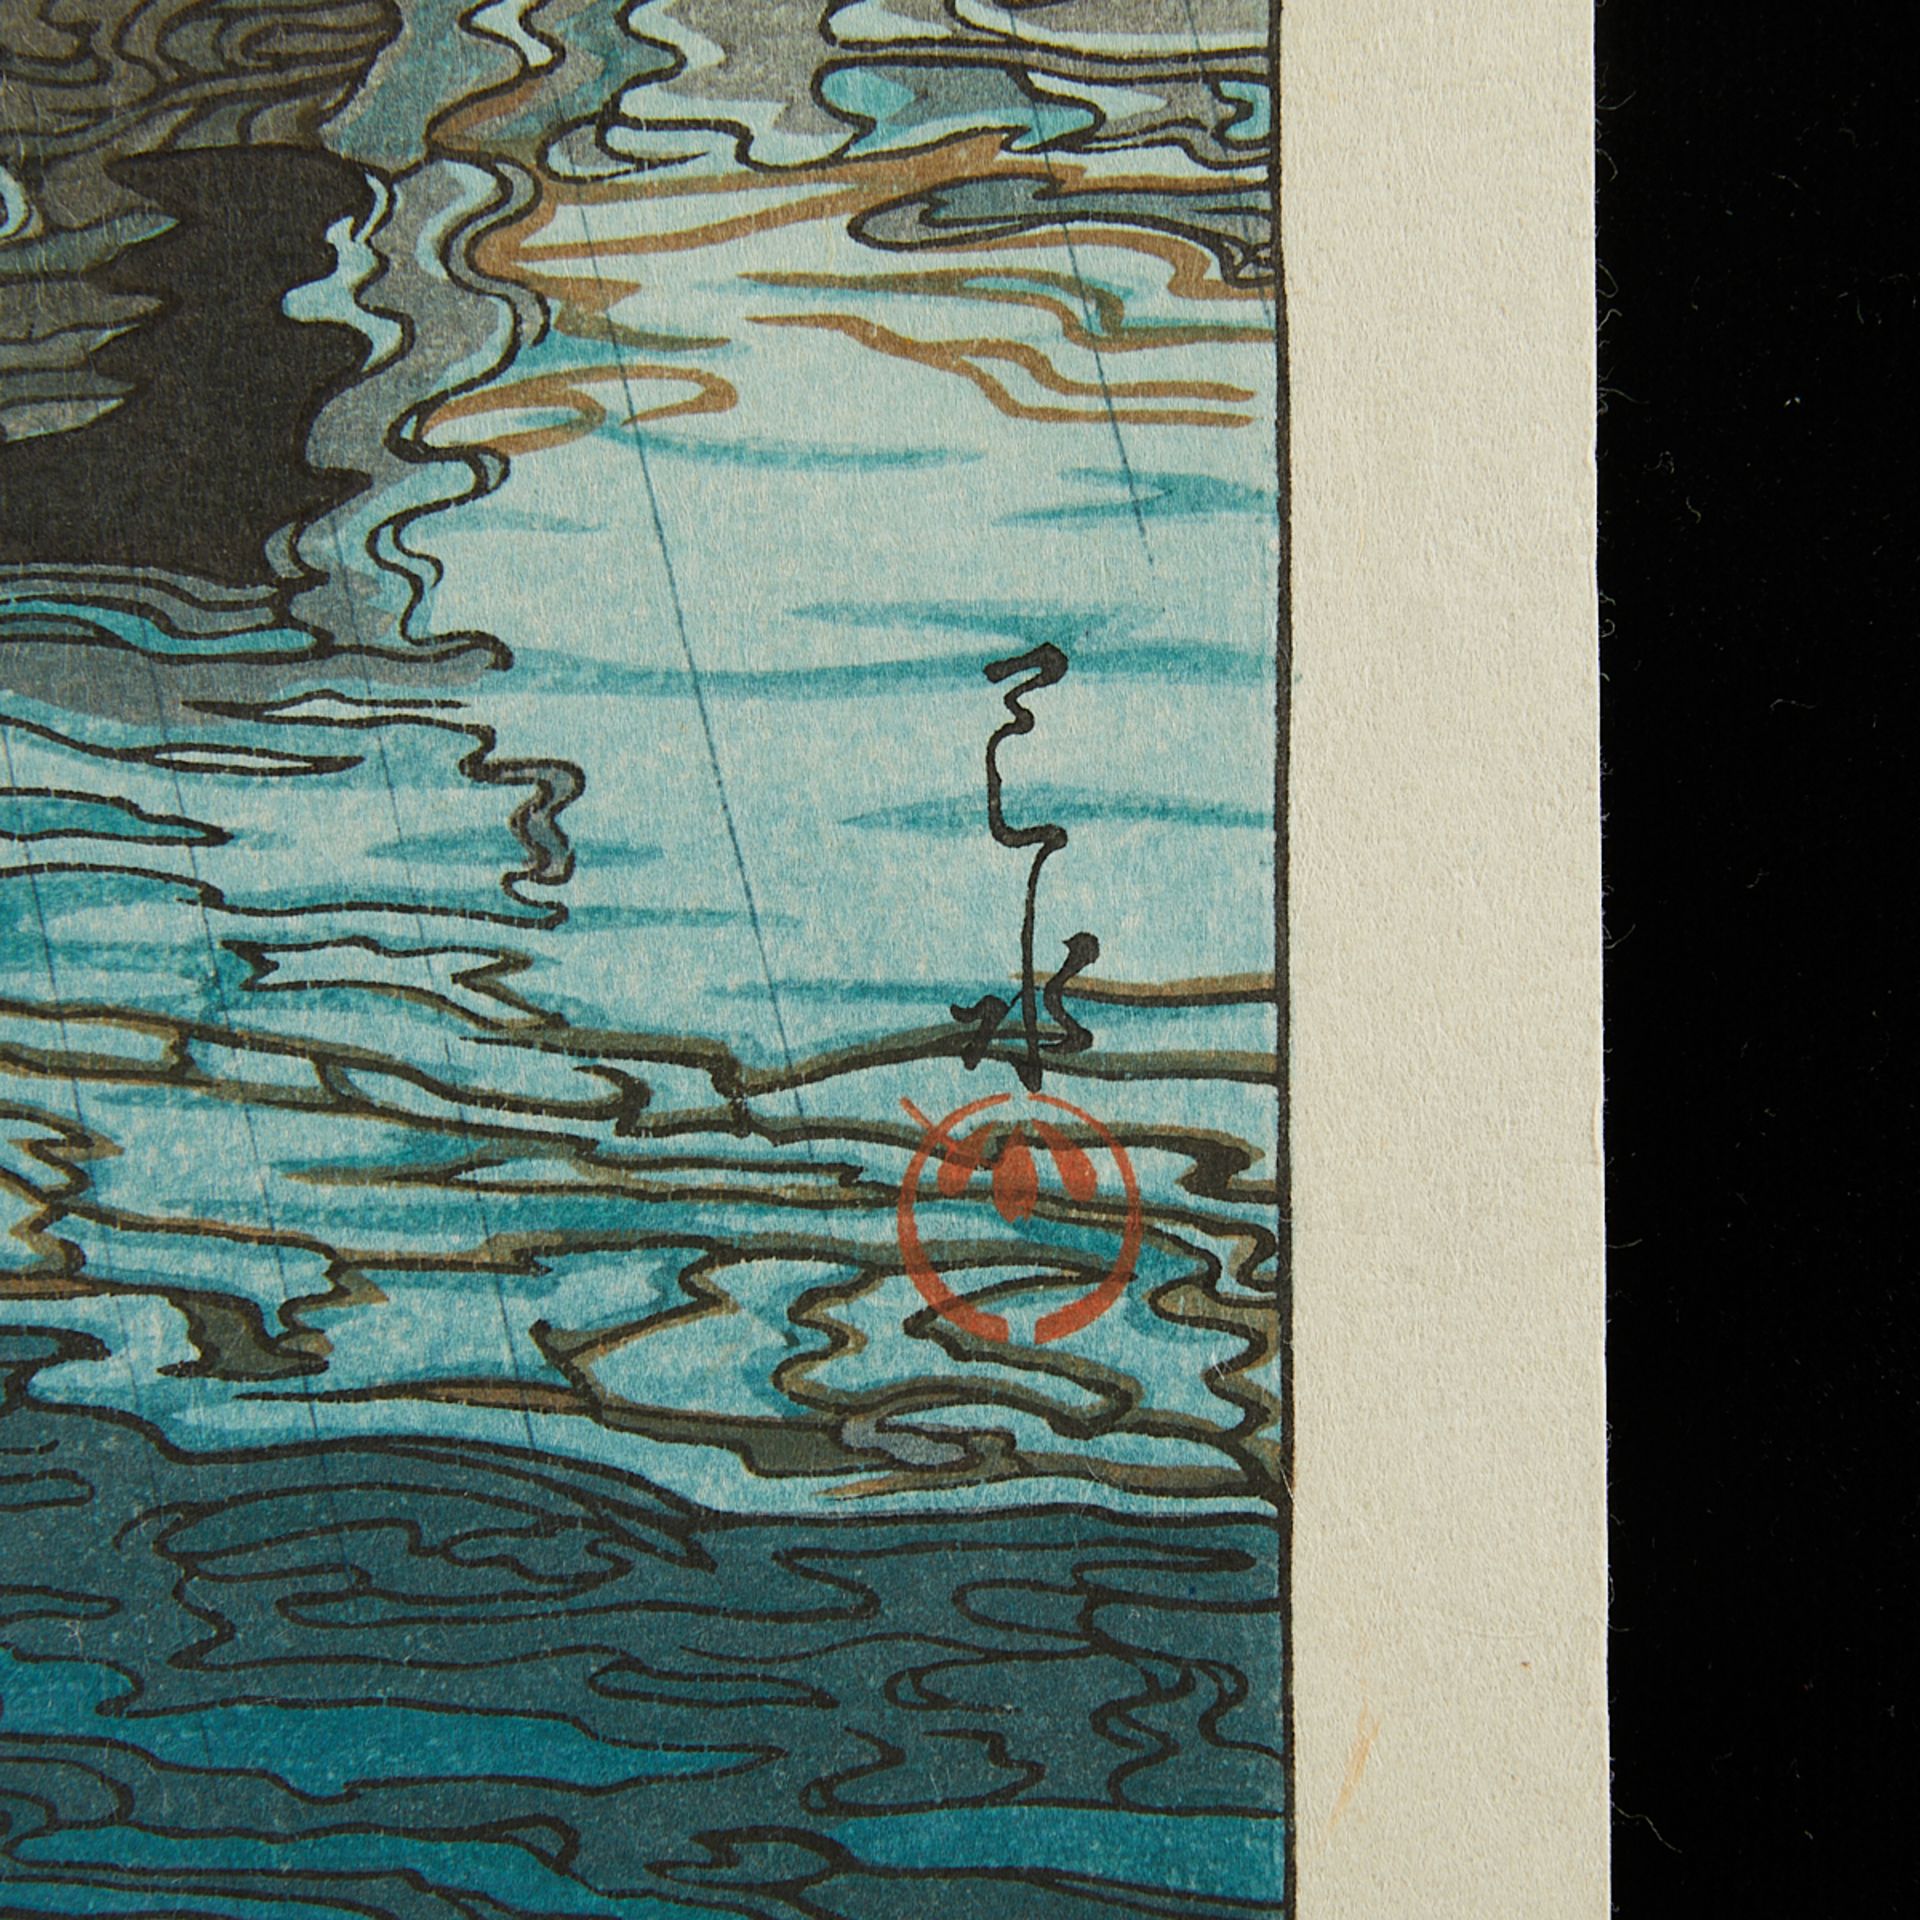 Hasui Kawase "Rain at Ushibori" Woodblock Print - Image 2 of 7